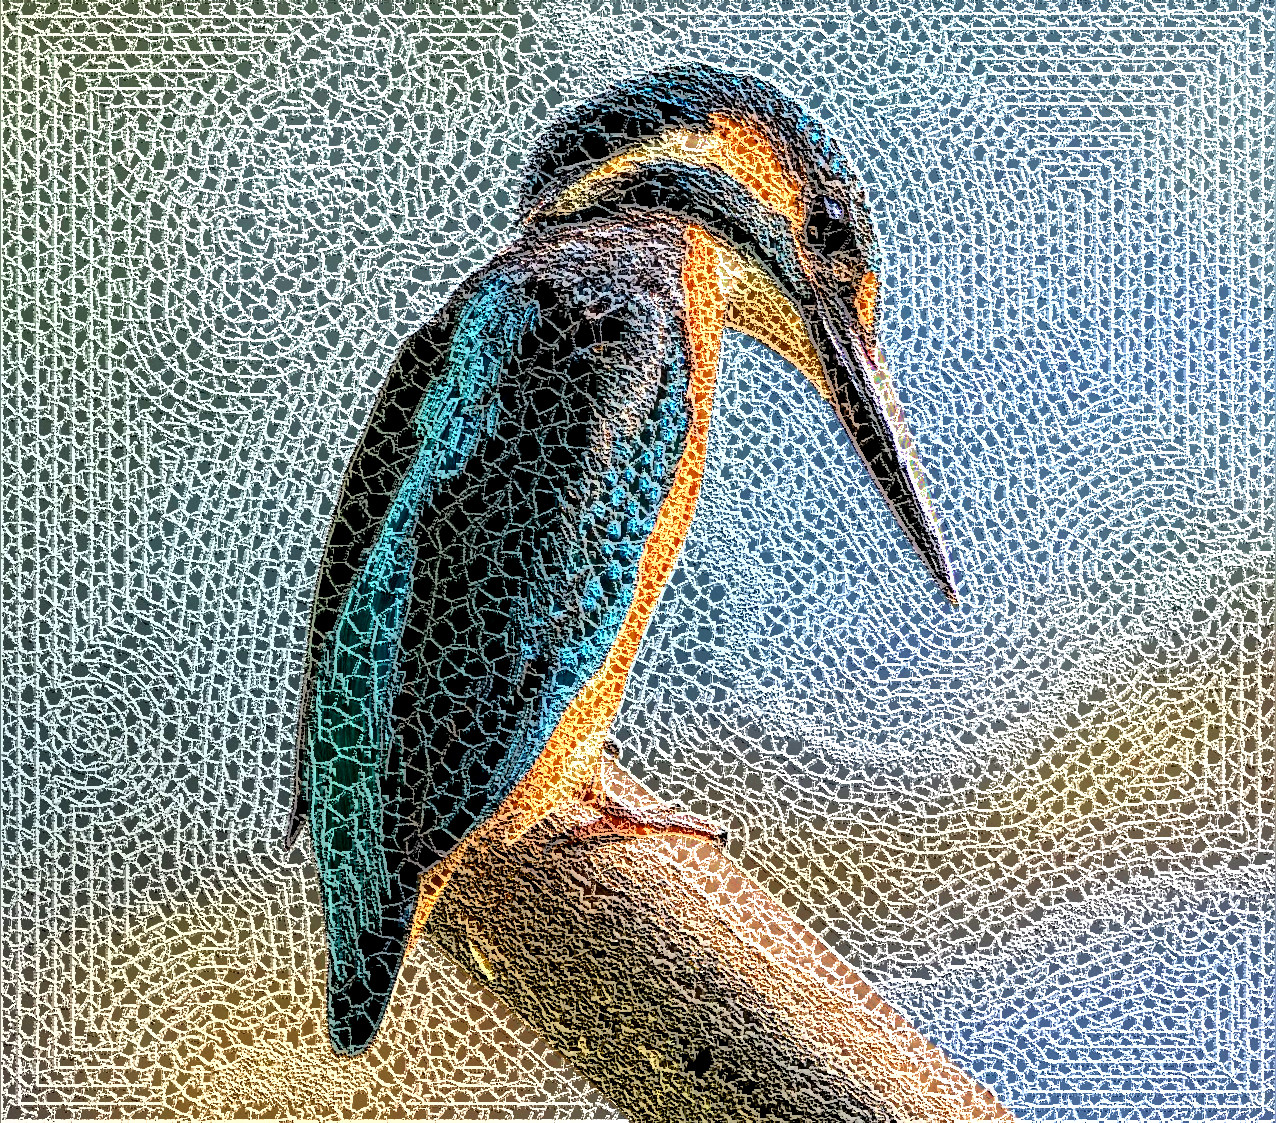 kingfisher_Crochet on Source.jpg